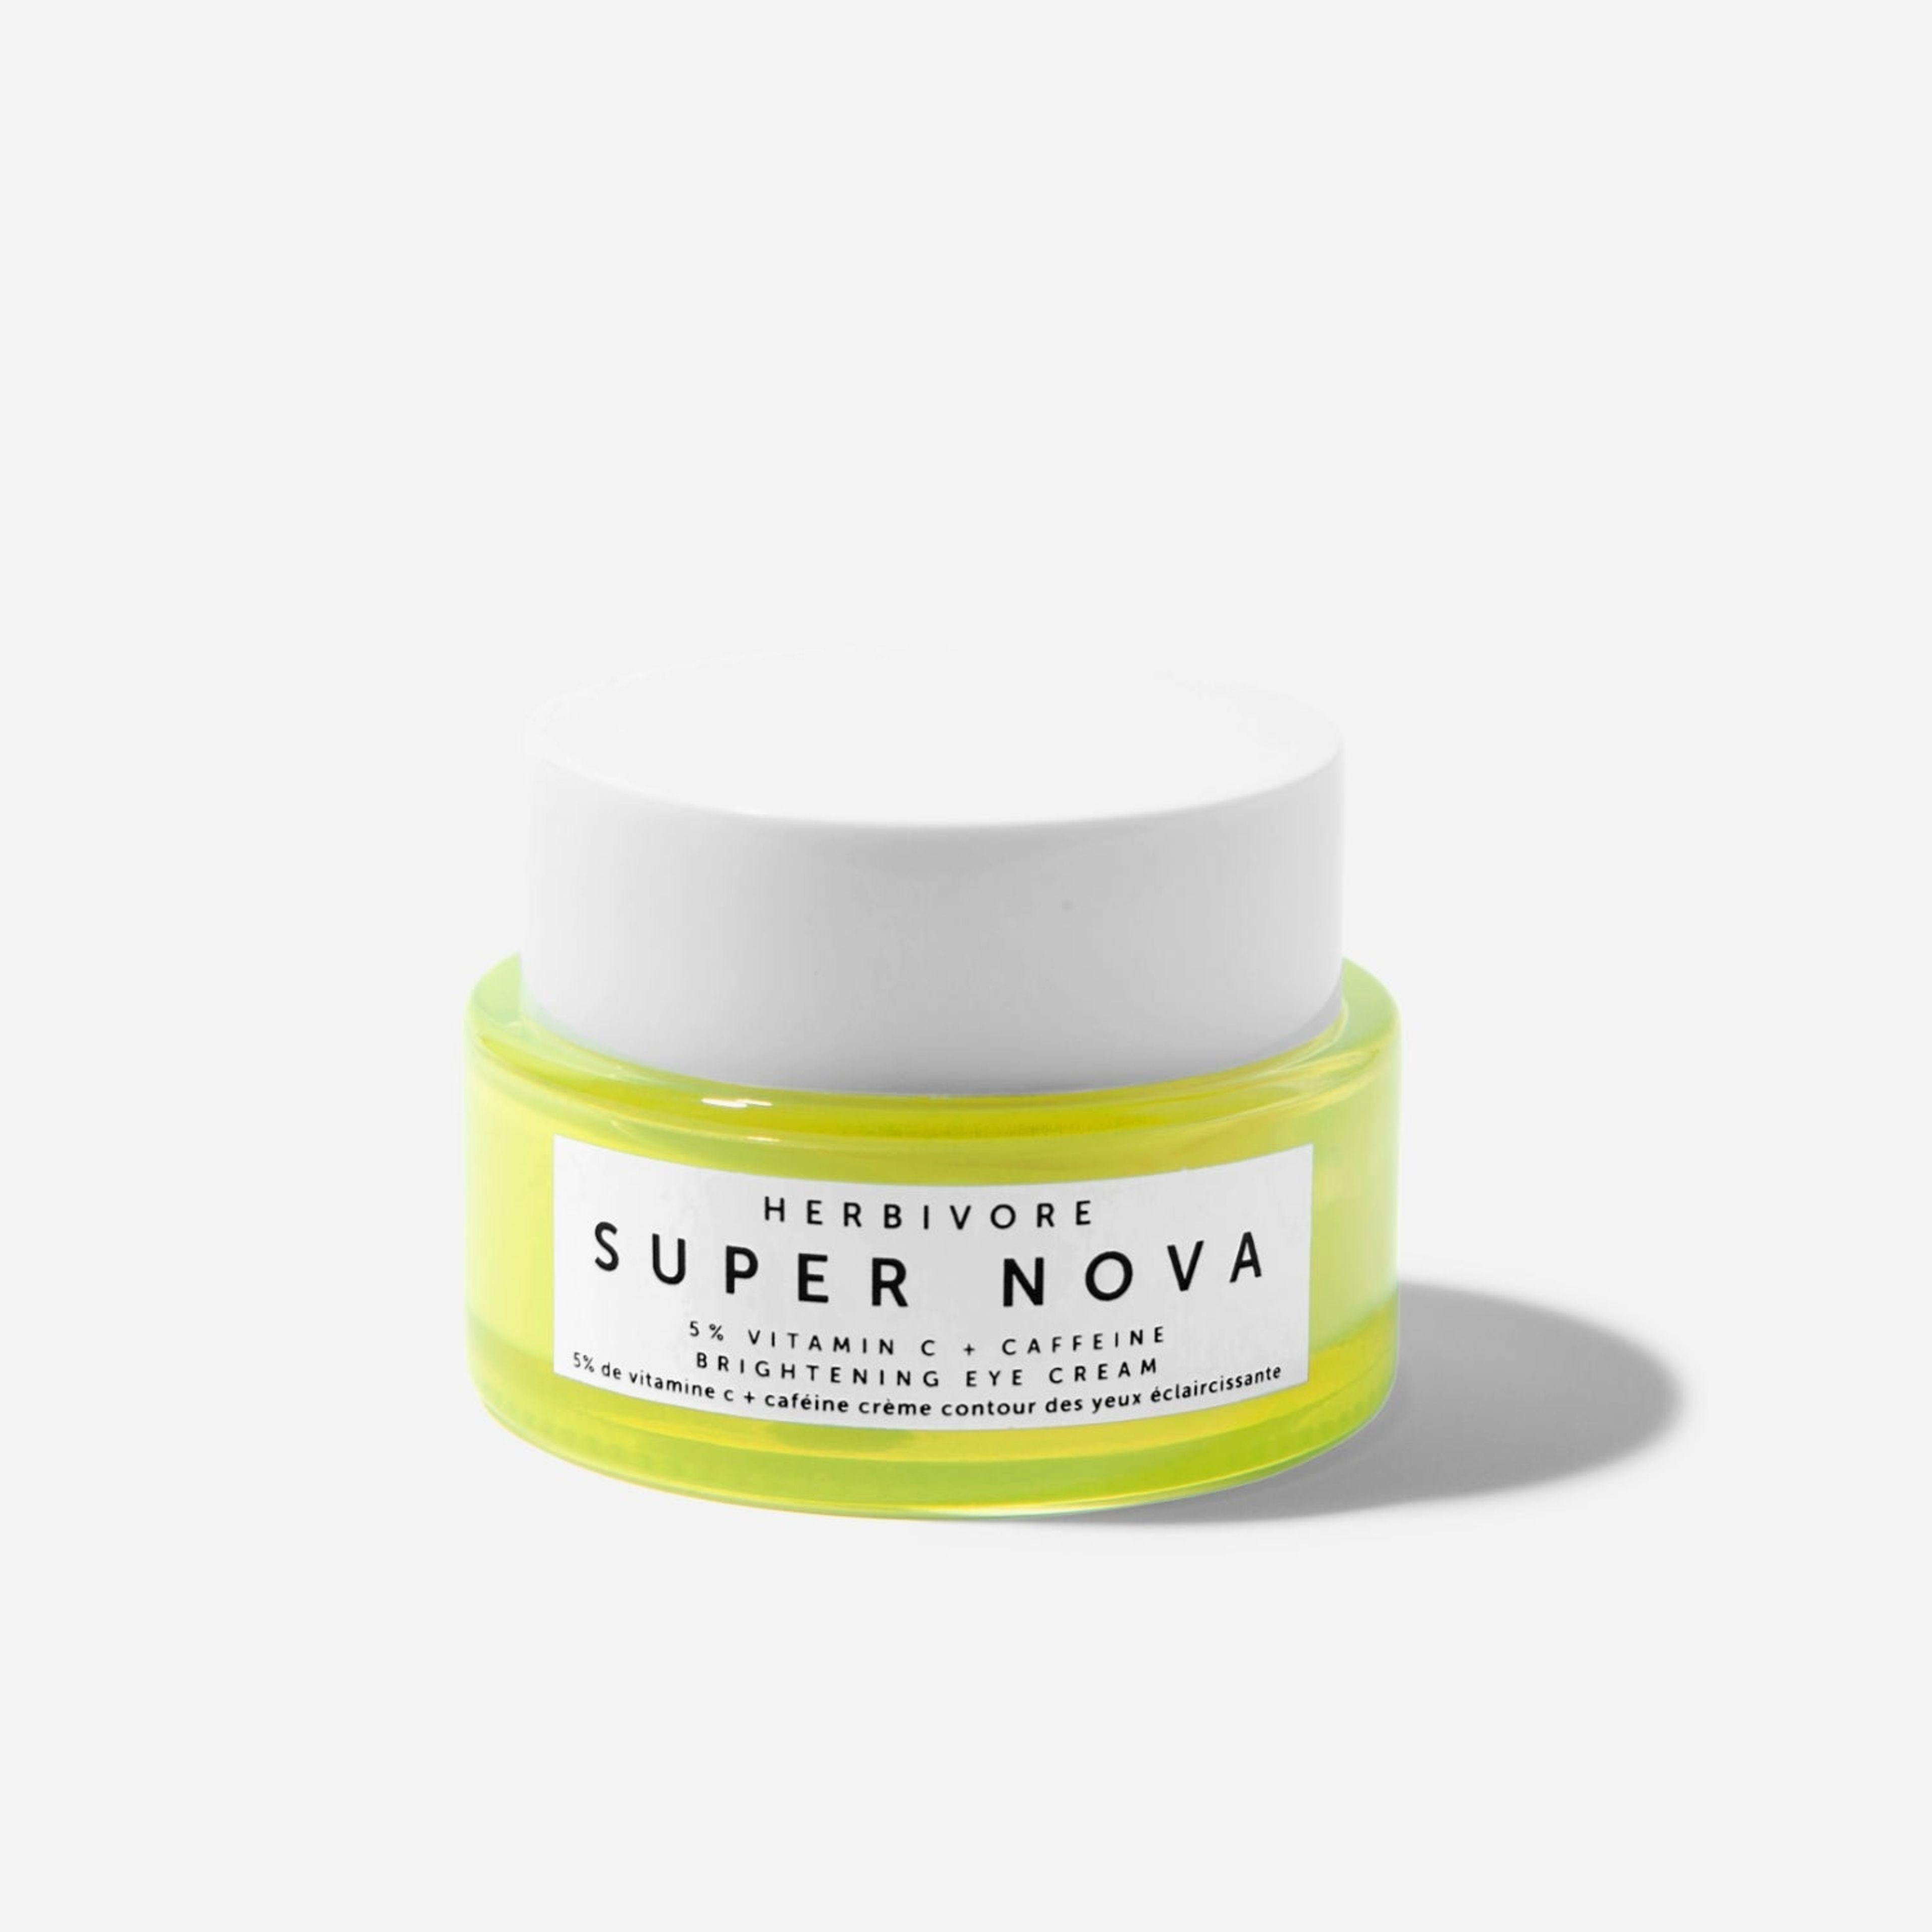 SUPER NOVA 5% Vitamin C + Caffeine Brightening Eye Cream